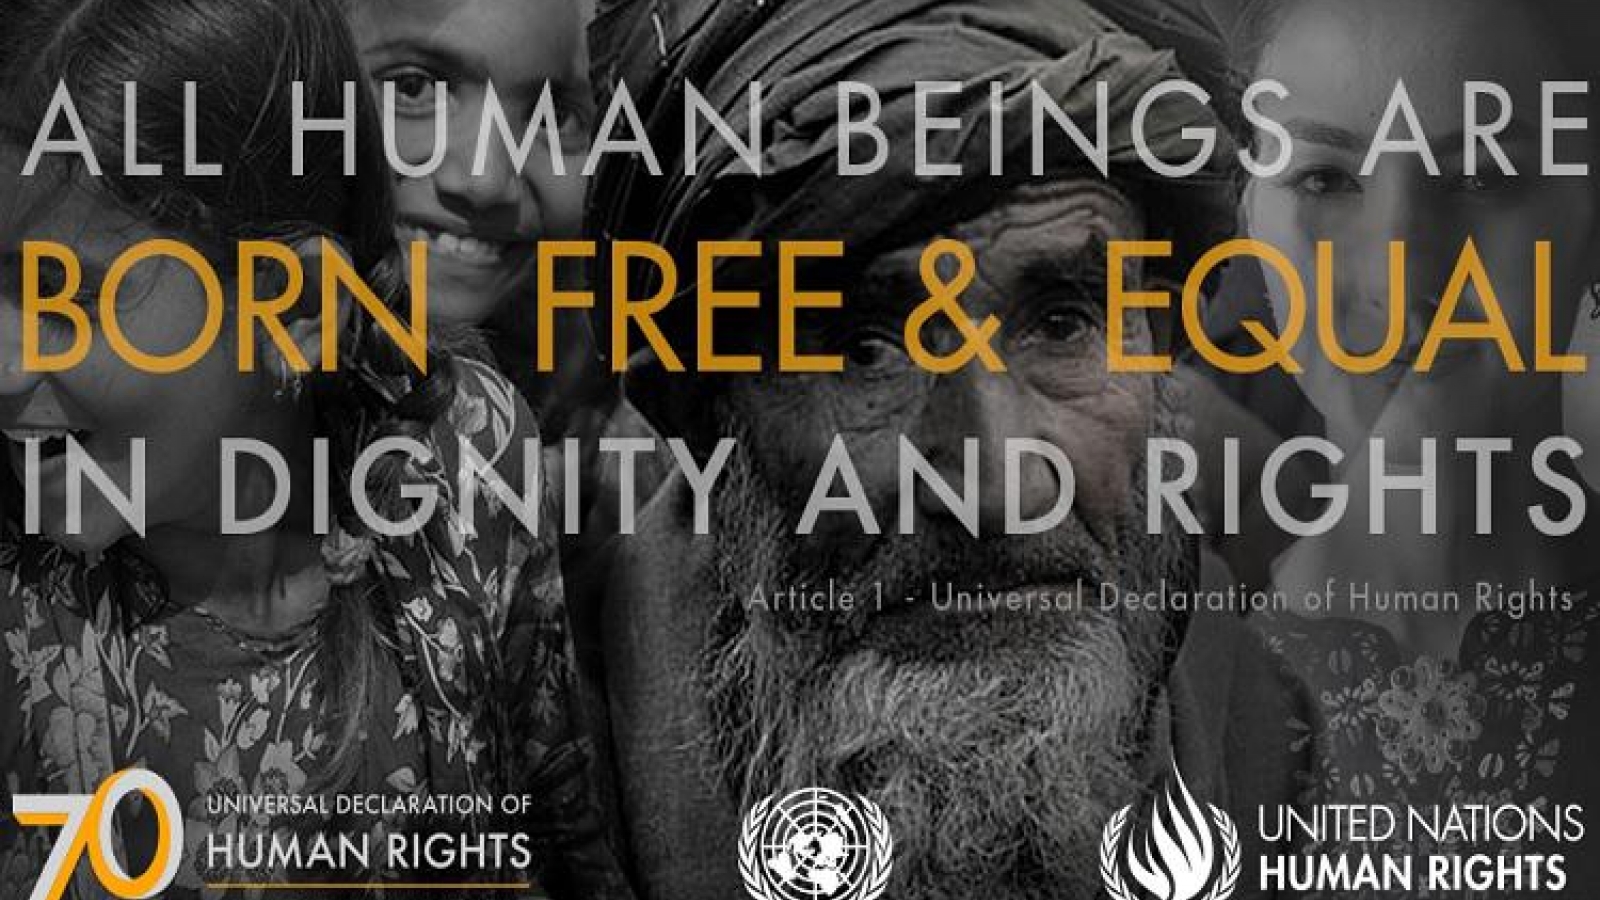 EU kicks off social media campaign to mark 70th anniversary of the Universal Declaration of Human Rights